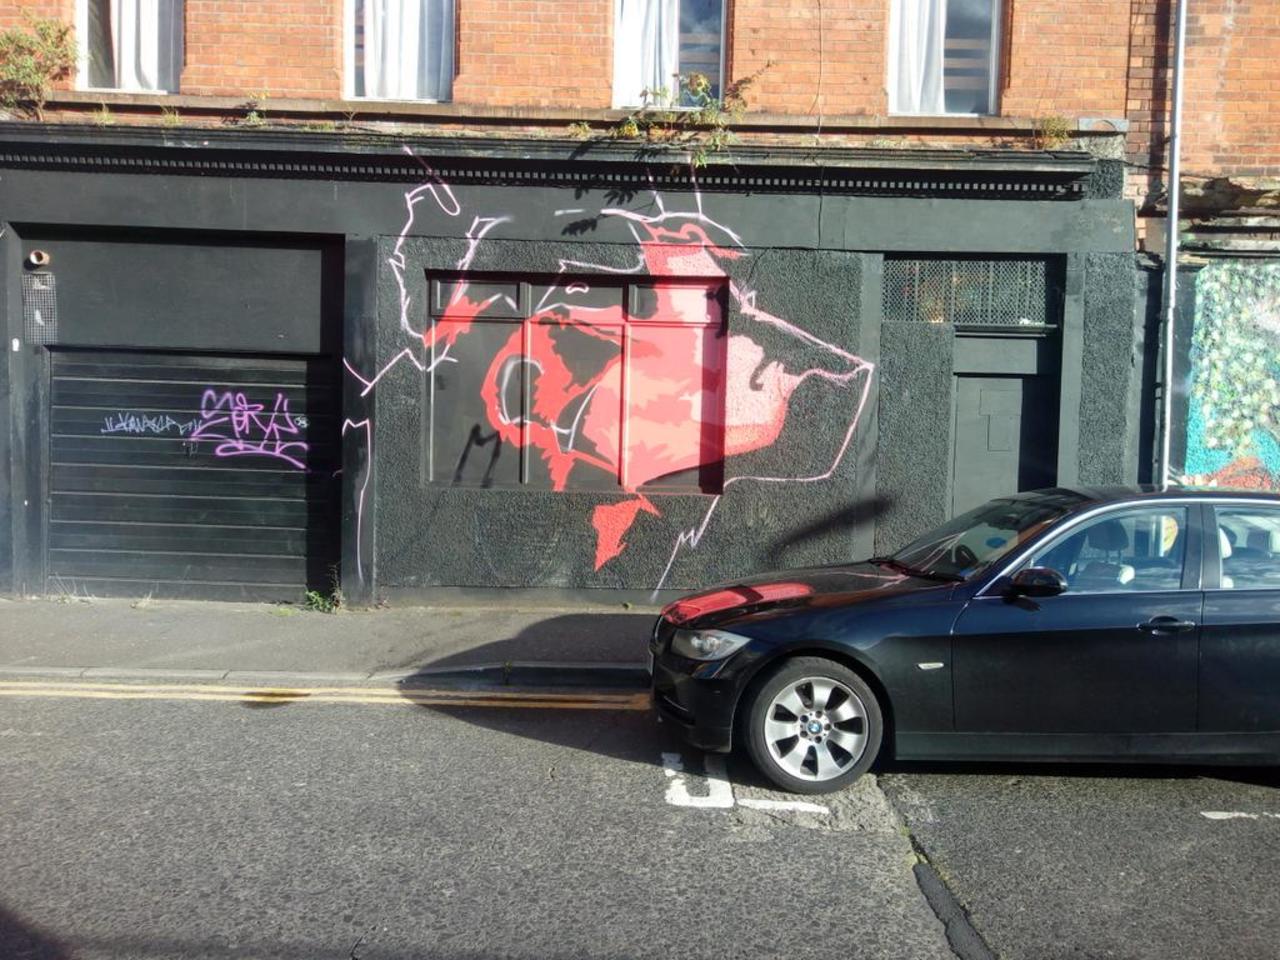 New Dog #StreetArt in Belfast City Centre.
Sun 4th Oct 2015.
#BeMoreDog #Graffiti http://t.co/gC9AKu7626